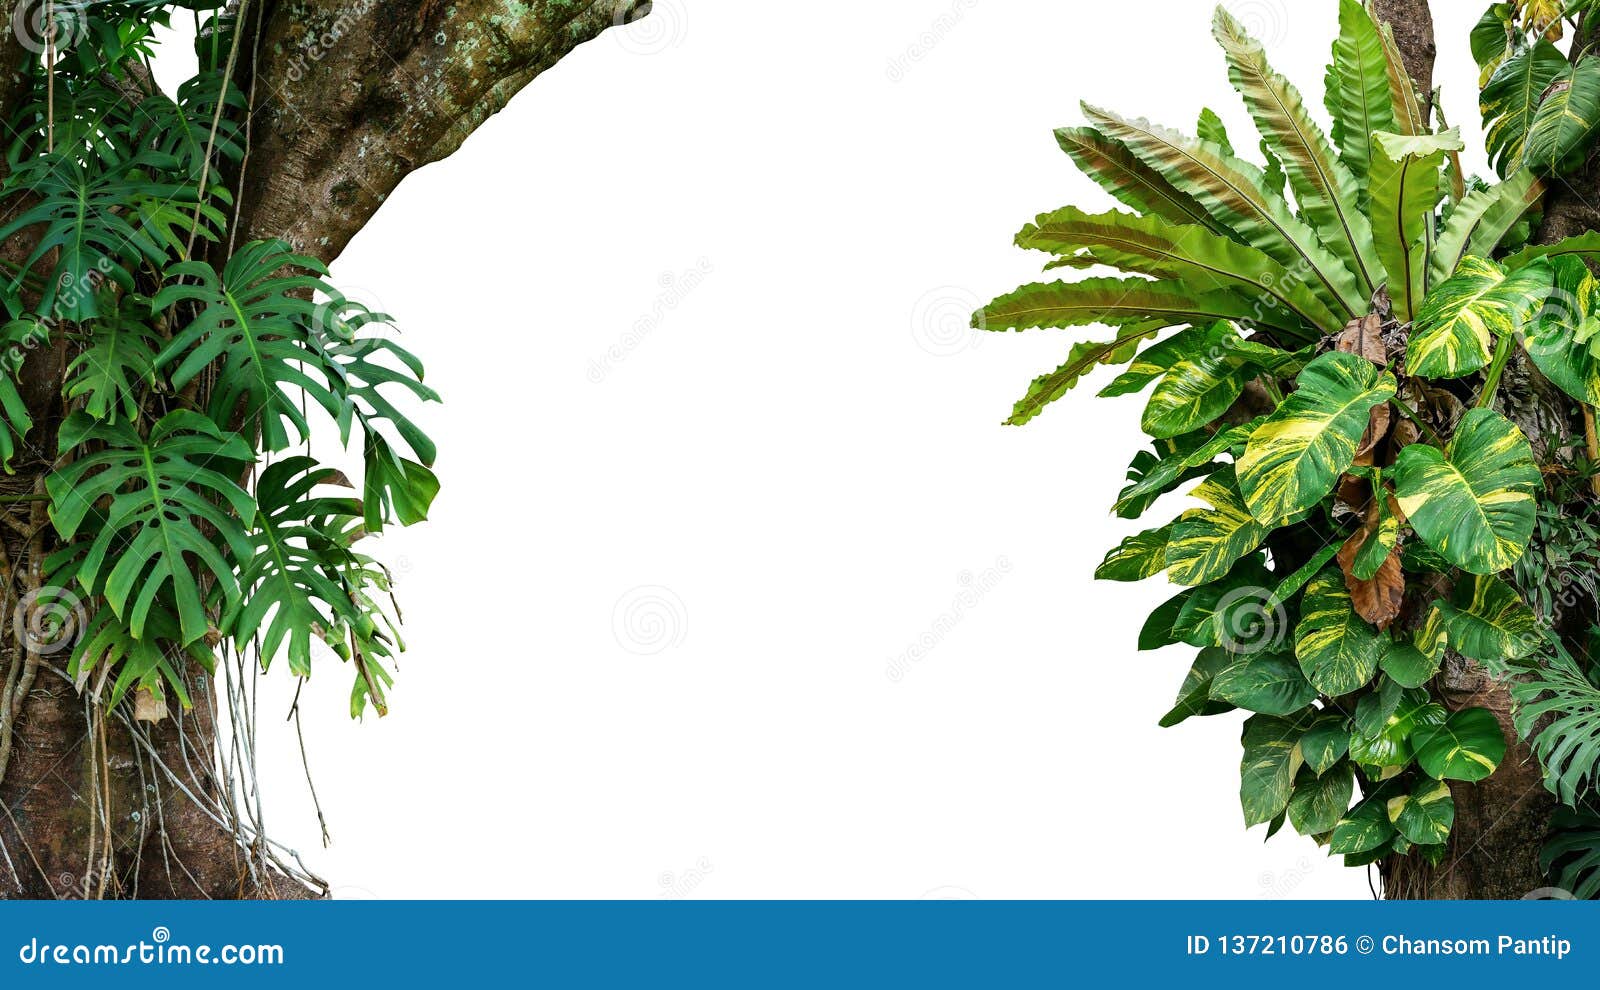 nature frame of jungle trees with tropical rainforest foliage plants climbing monstera, birdÃ¢â¬â¢s nest fern, golden pothos and